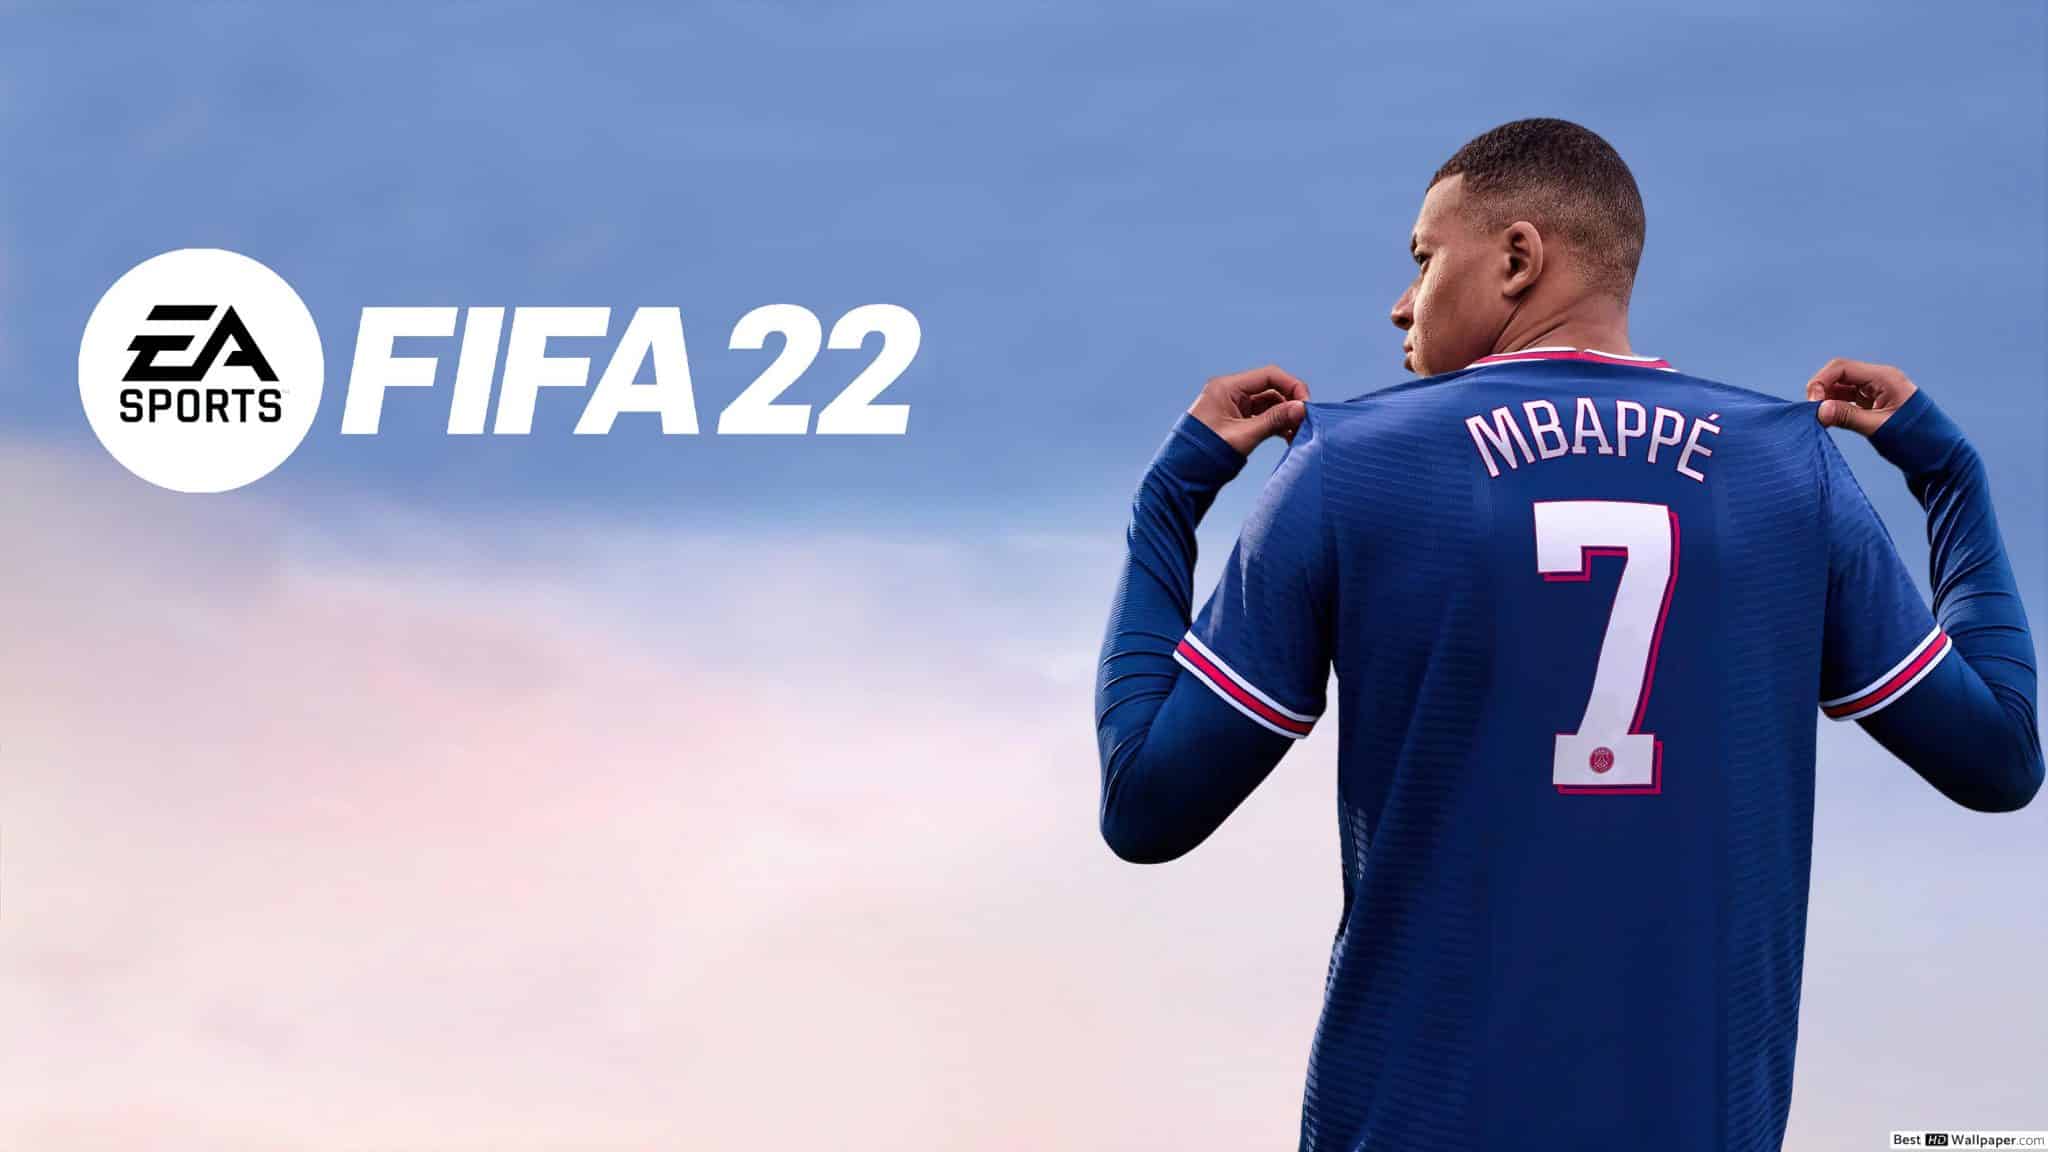 FIFA 22 Mbappé